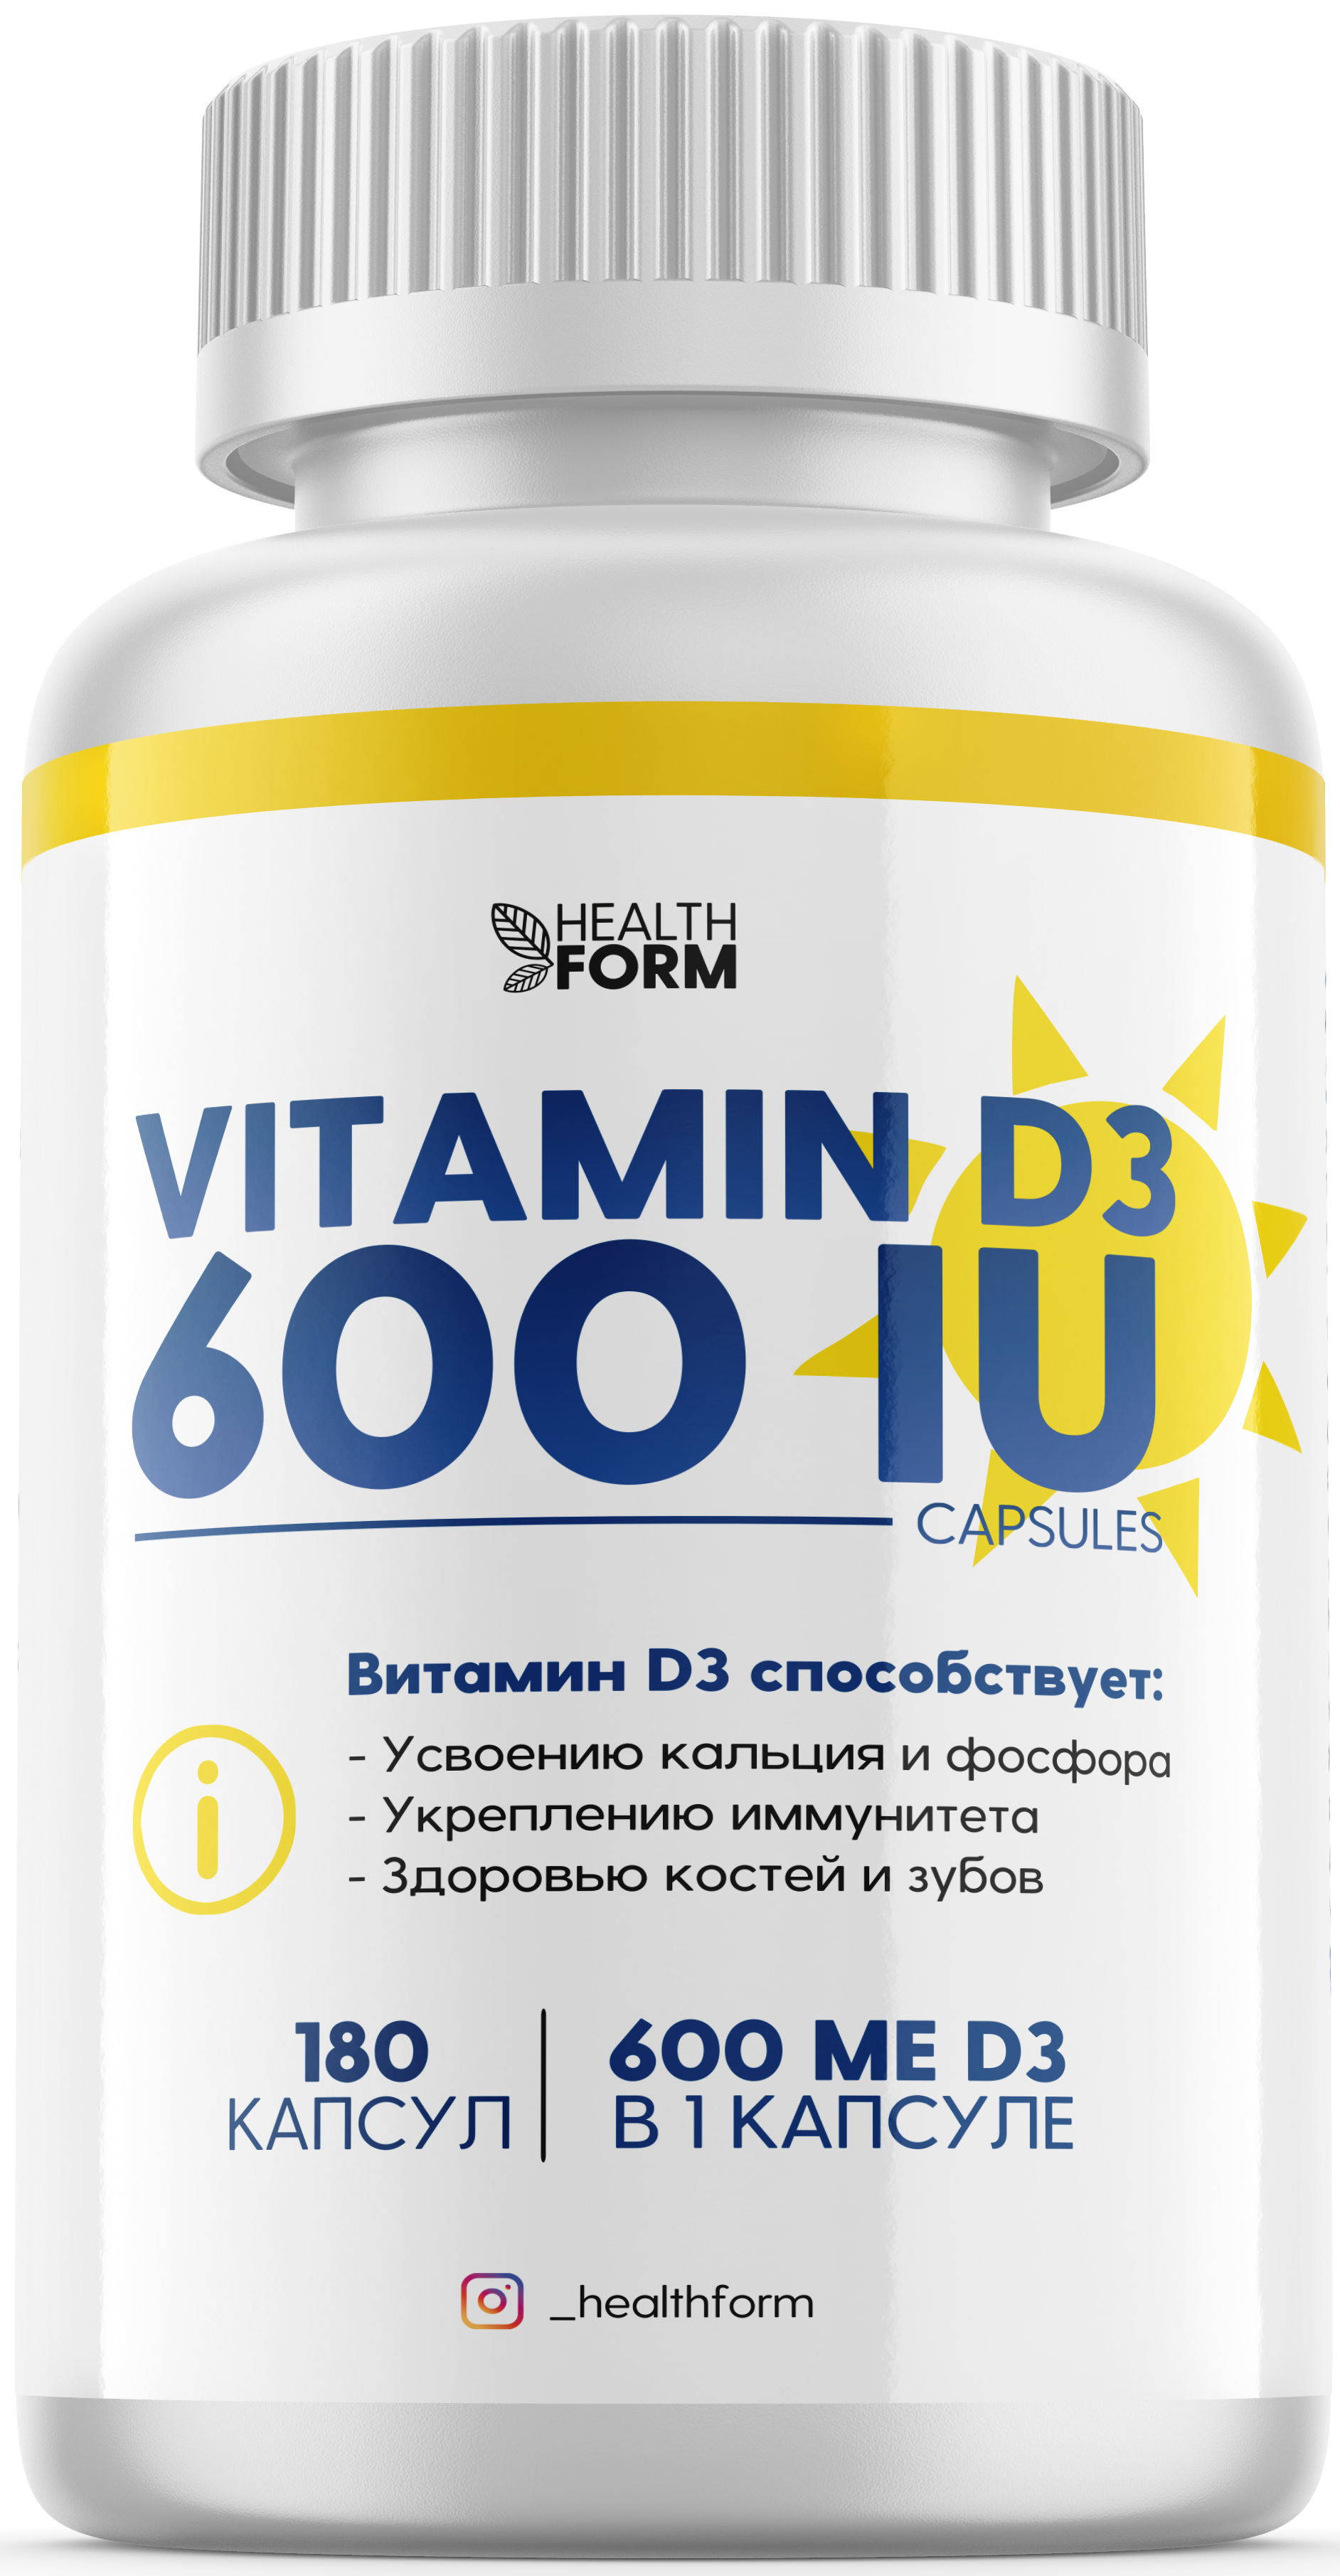 Vitamin d3 10000 iu. Vitamin d3 600 IU. Витамин д3 600 ме / VPLAB / Vitamin d3 600 IU / 240 caps. BIOIMPACT d3 10000.